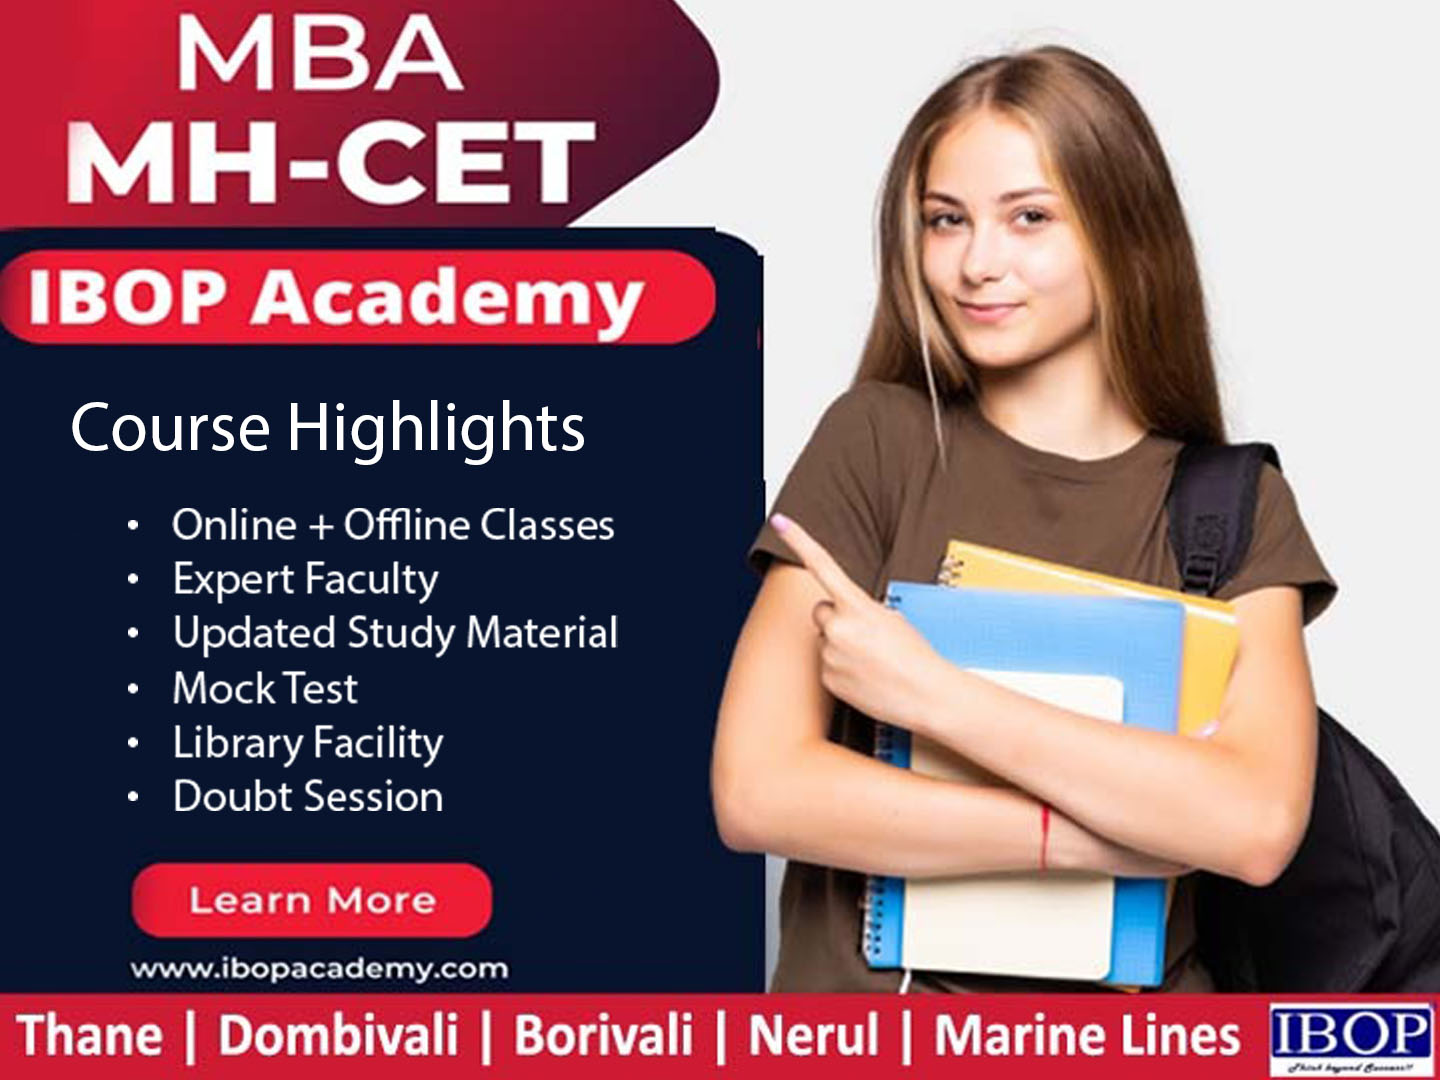 MBA MHCET Blog IBOP Academy